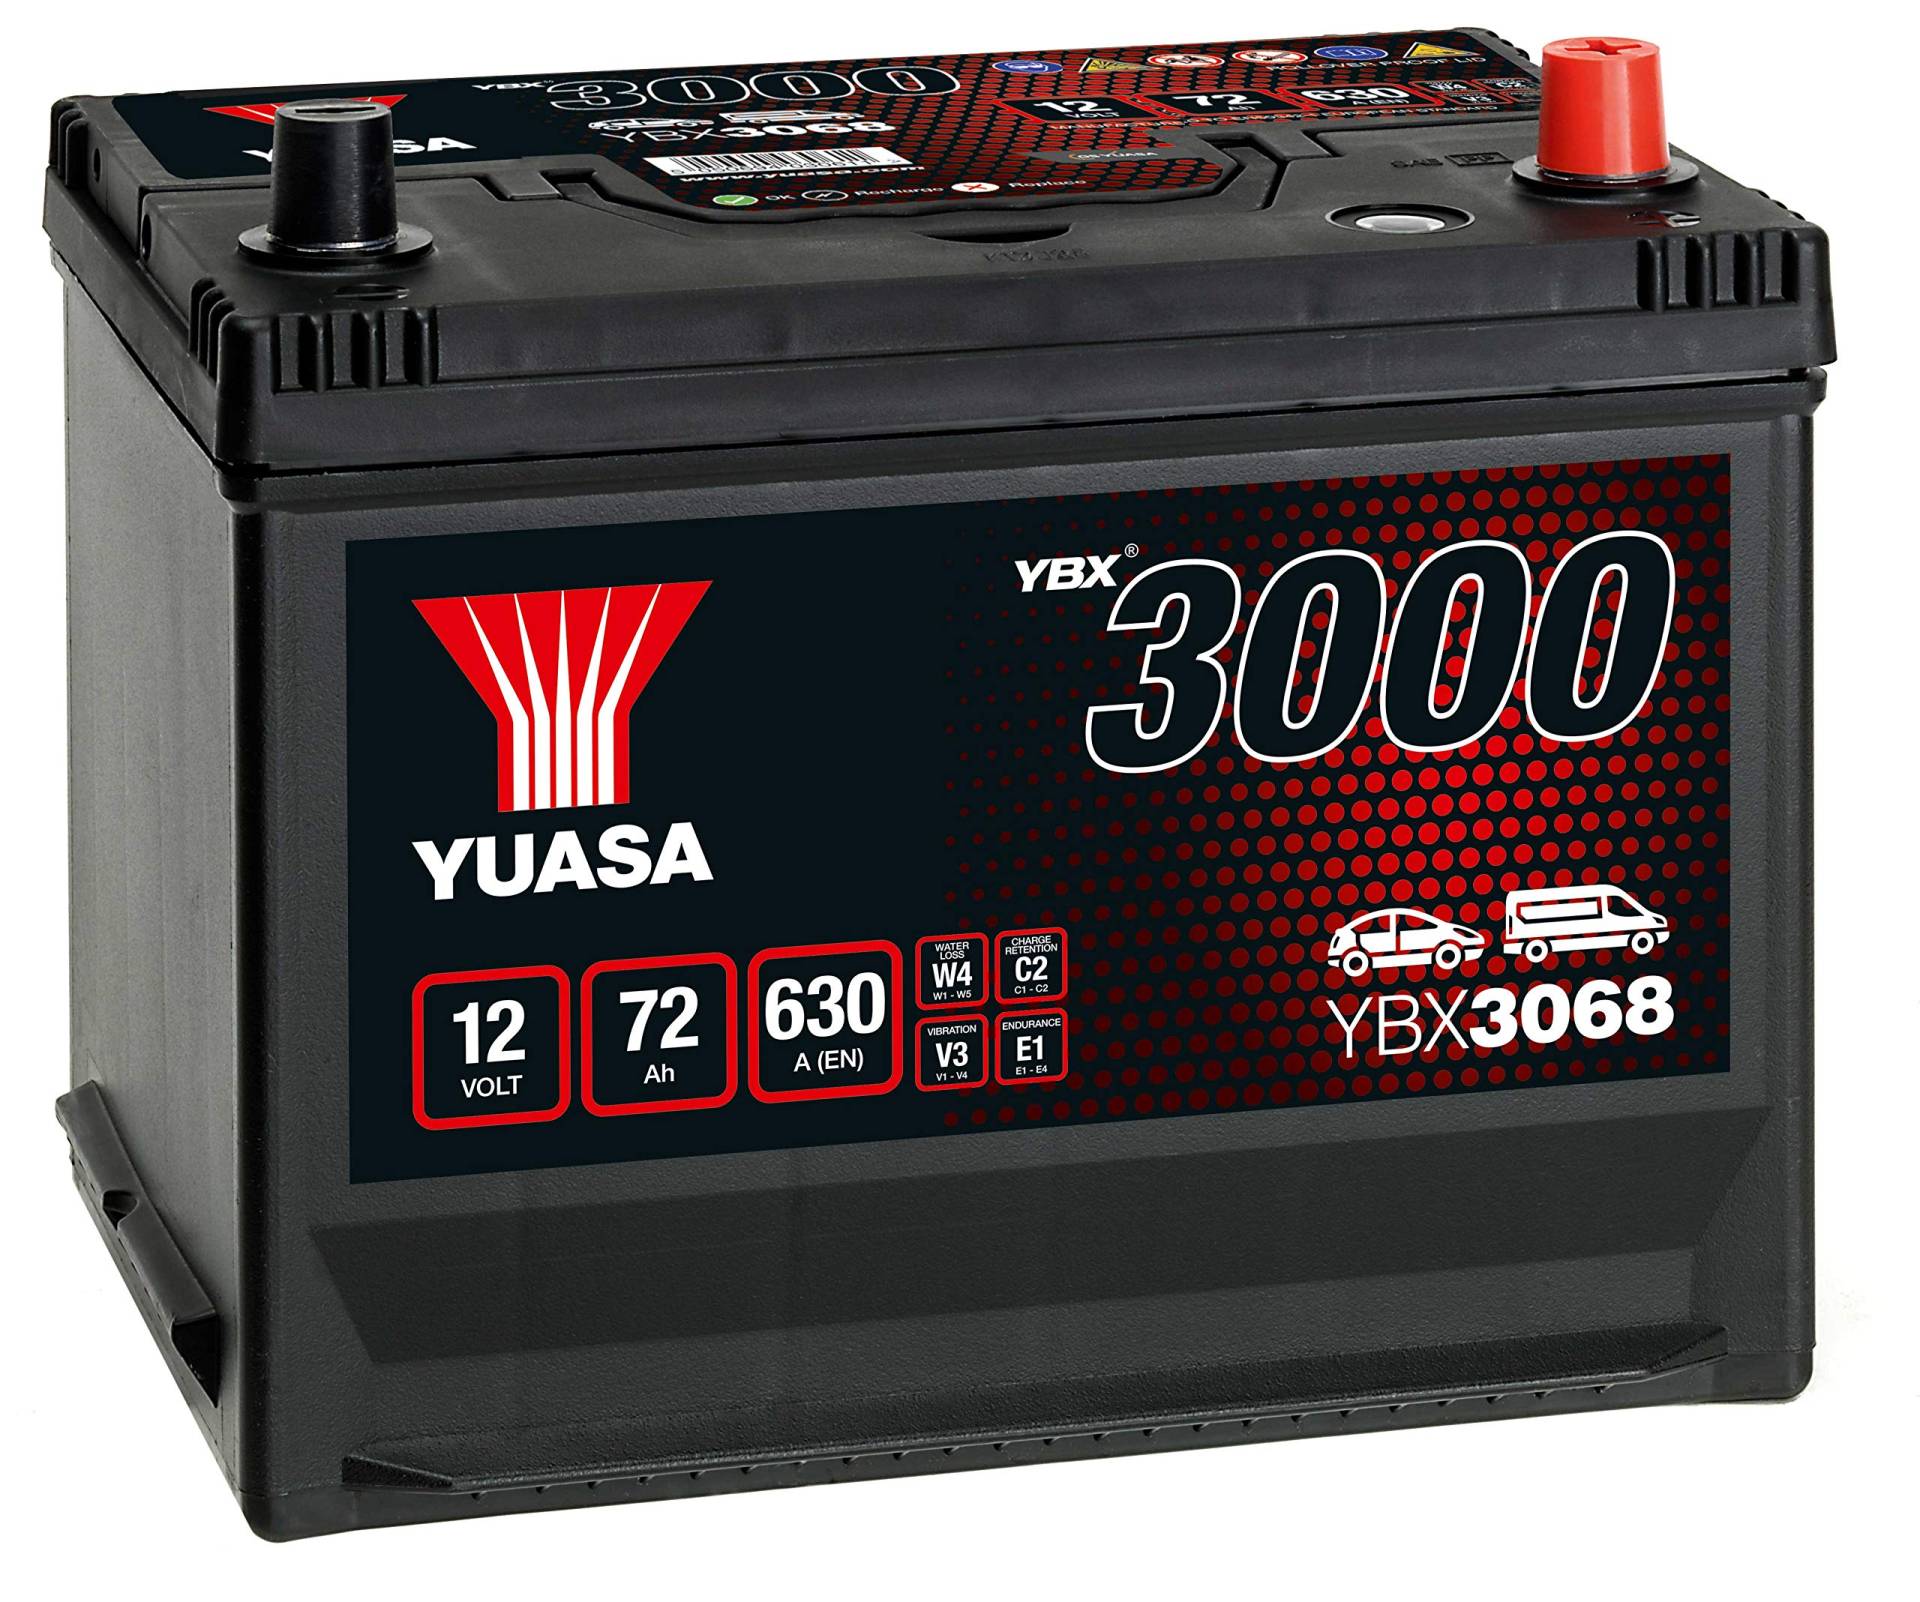 Yuasa YBX3068 SMF-Batterie, 12 V, 72 Ah, 630 A von Yuasa